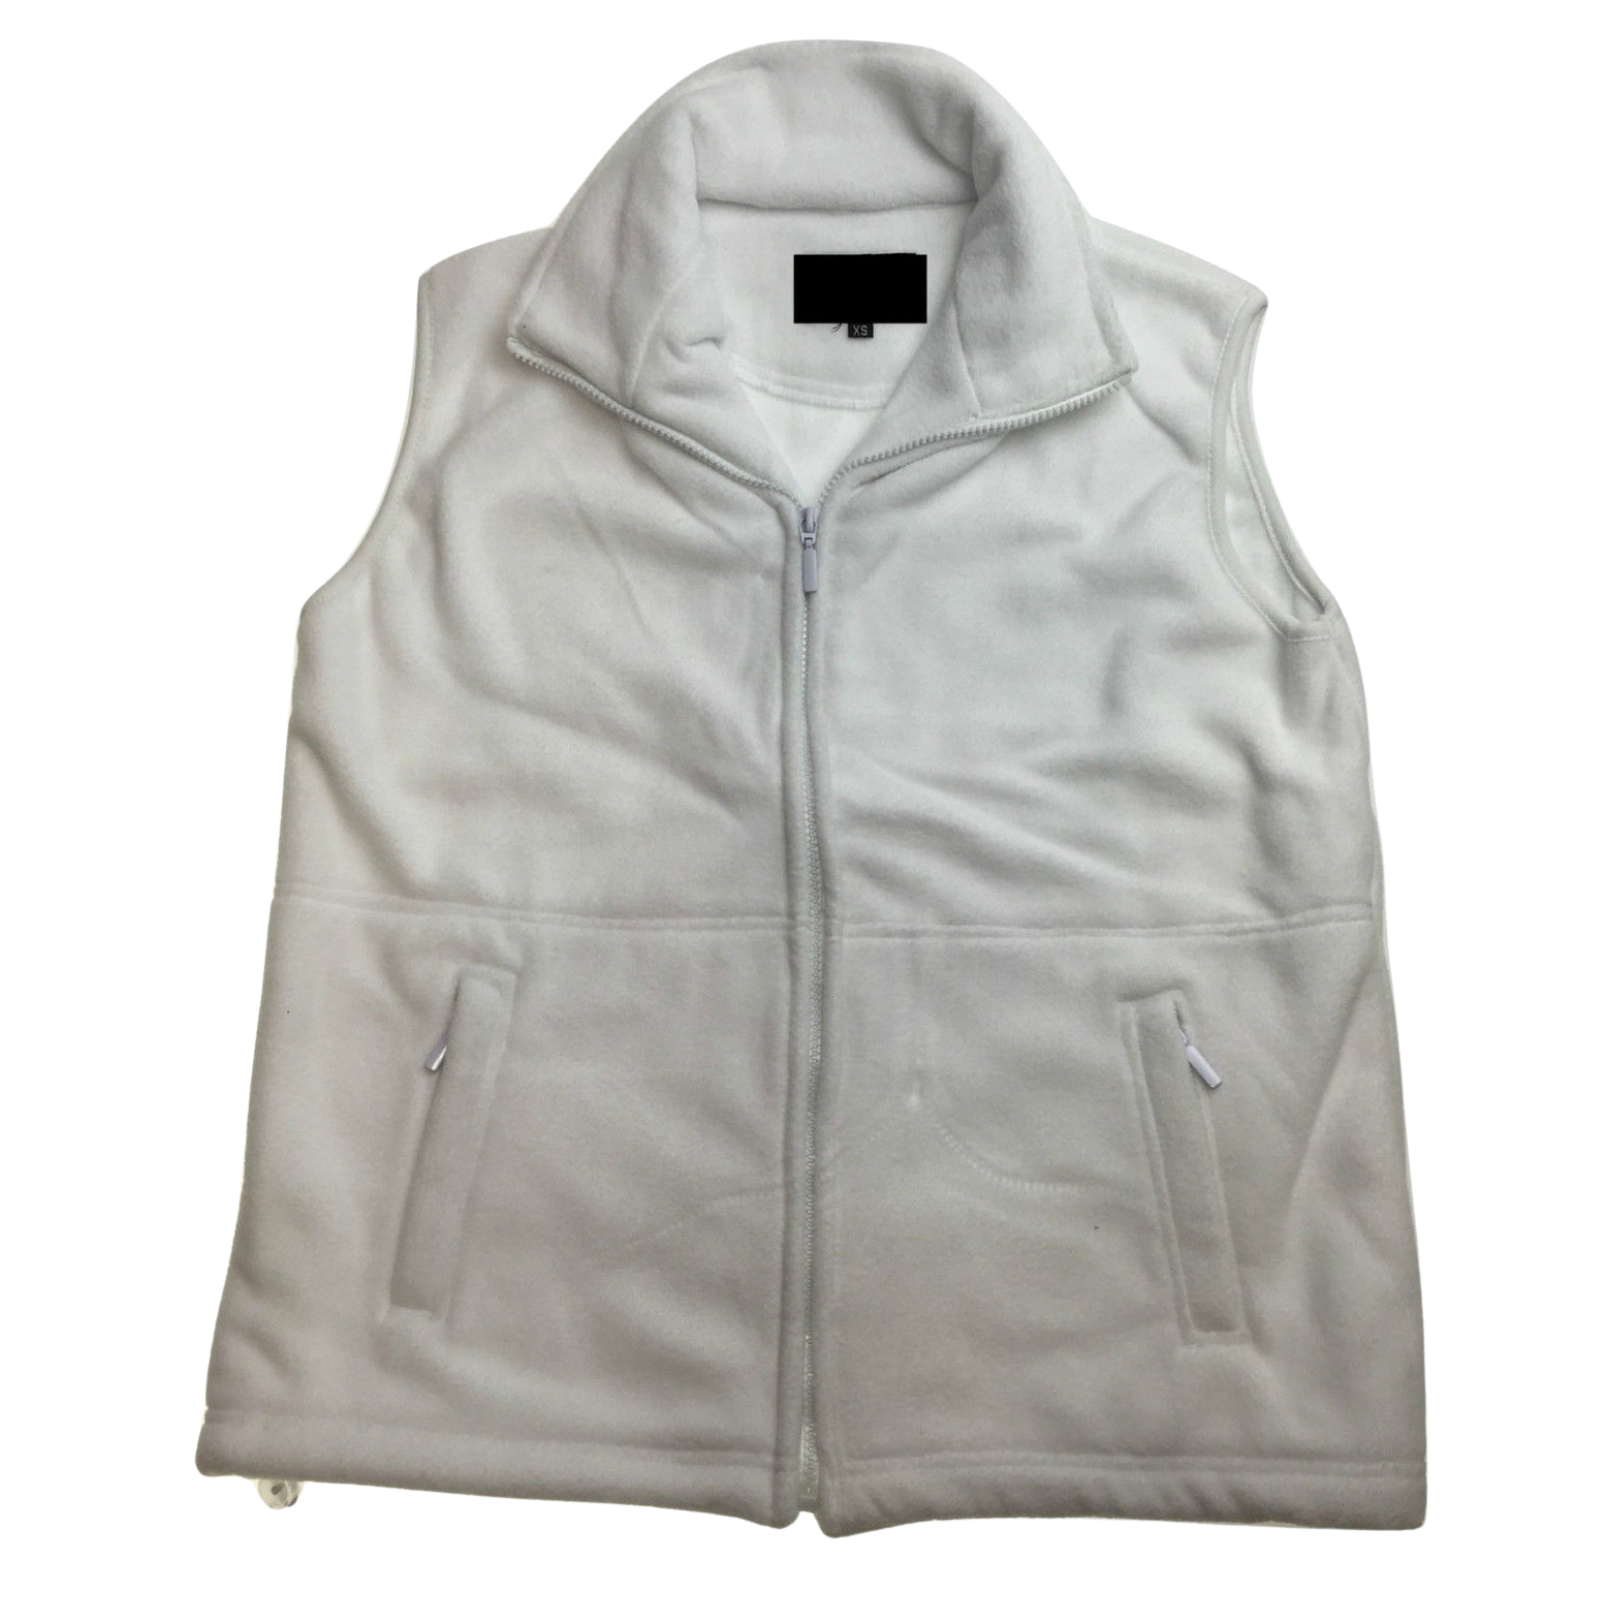 WHITE,POLAR FLEECE VEST Thick Casual Wear Warm Winter Plain Fleecy Jacket